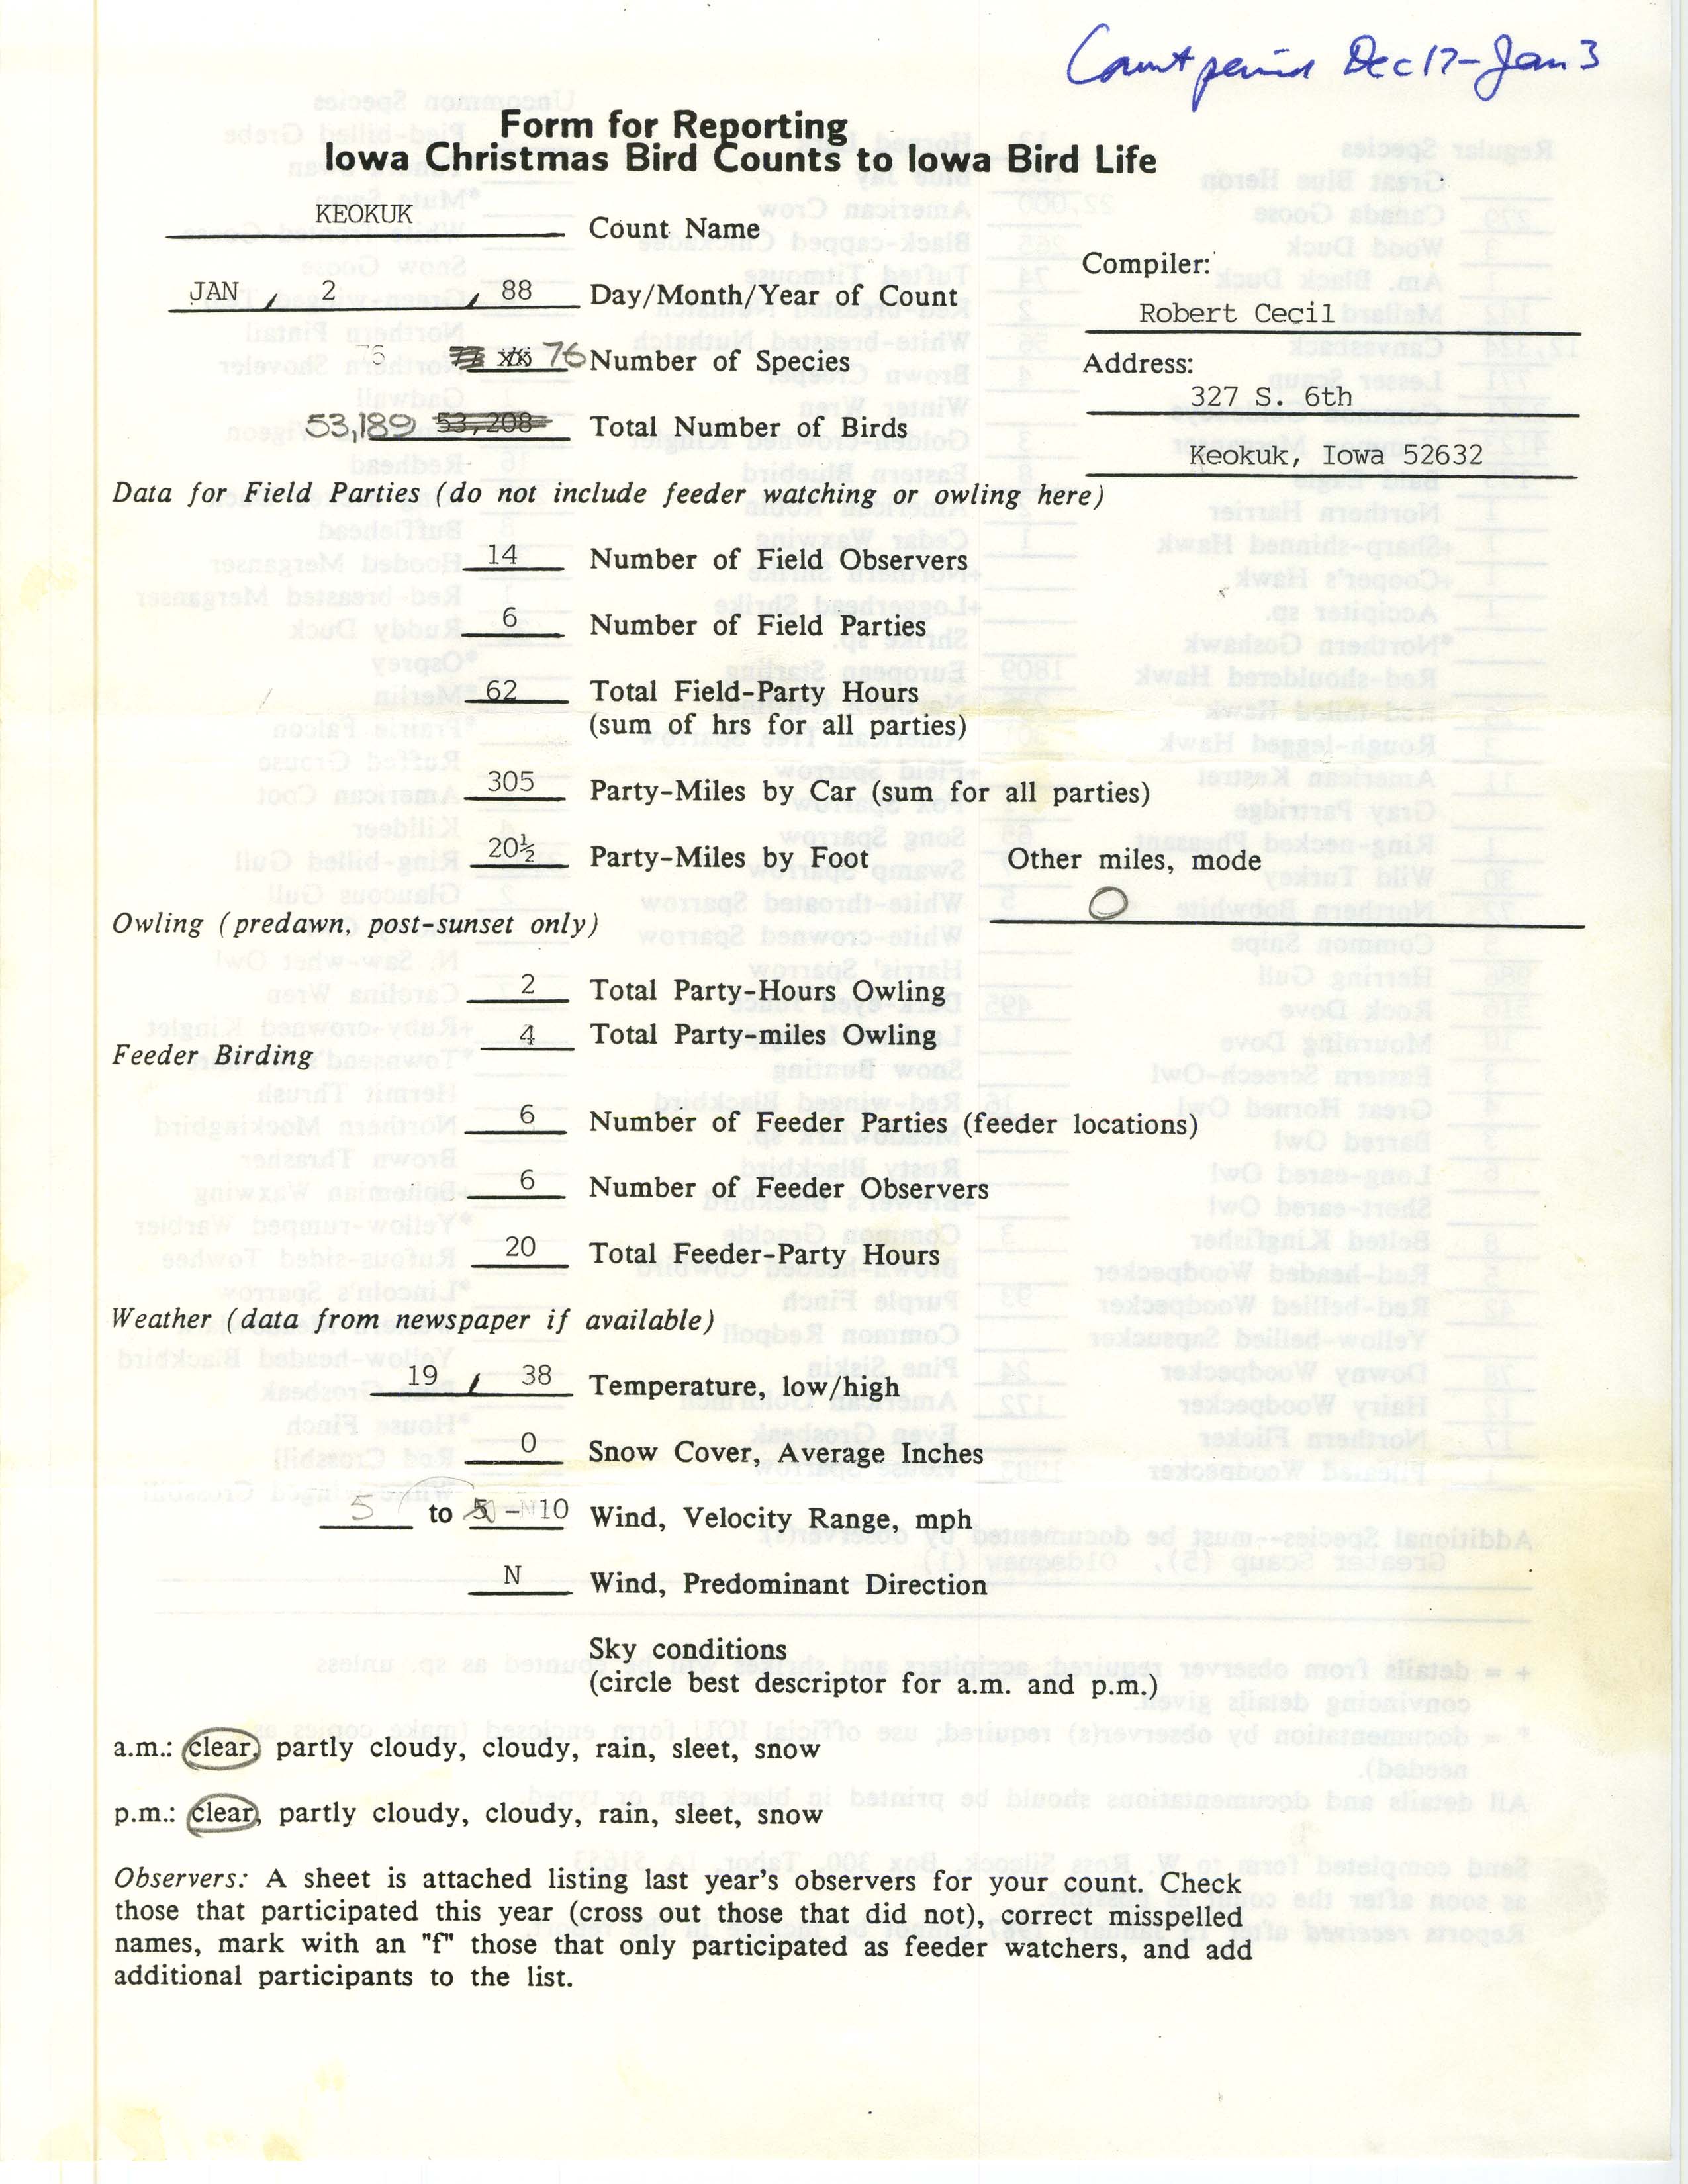 Form for reporting Iowa Christmas bird counts to Iowa Bird Life, Robert I. Cecil, January 2, 1988